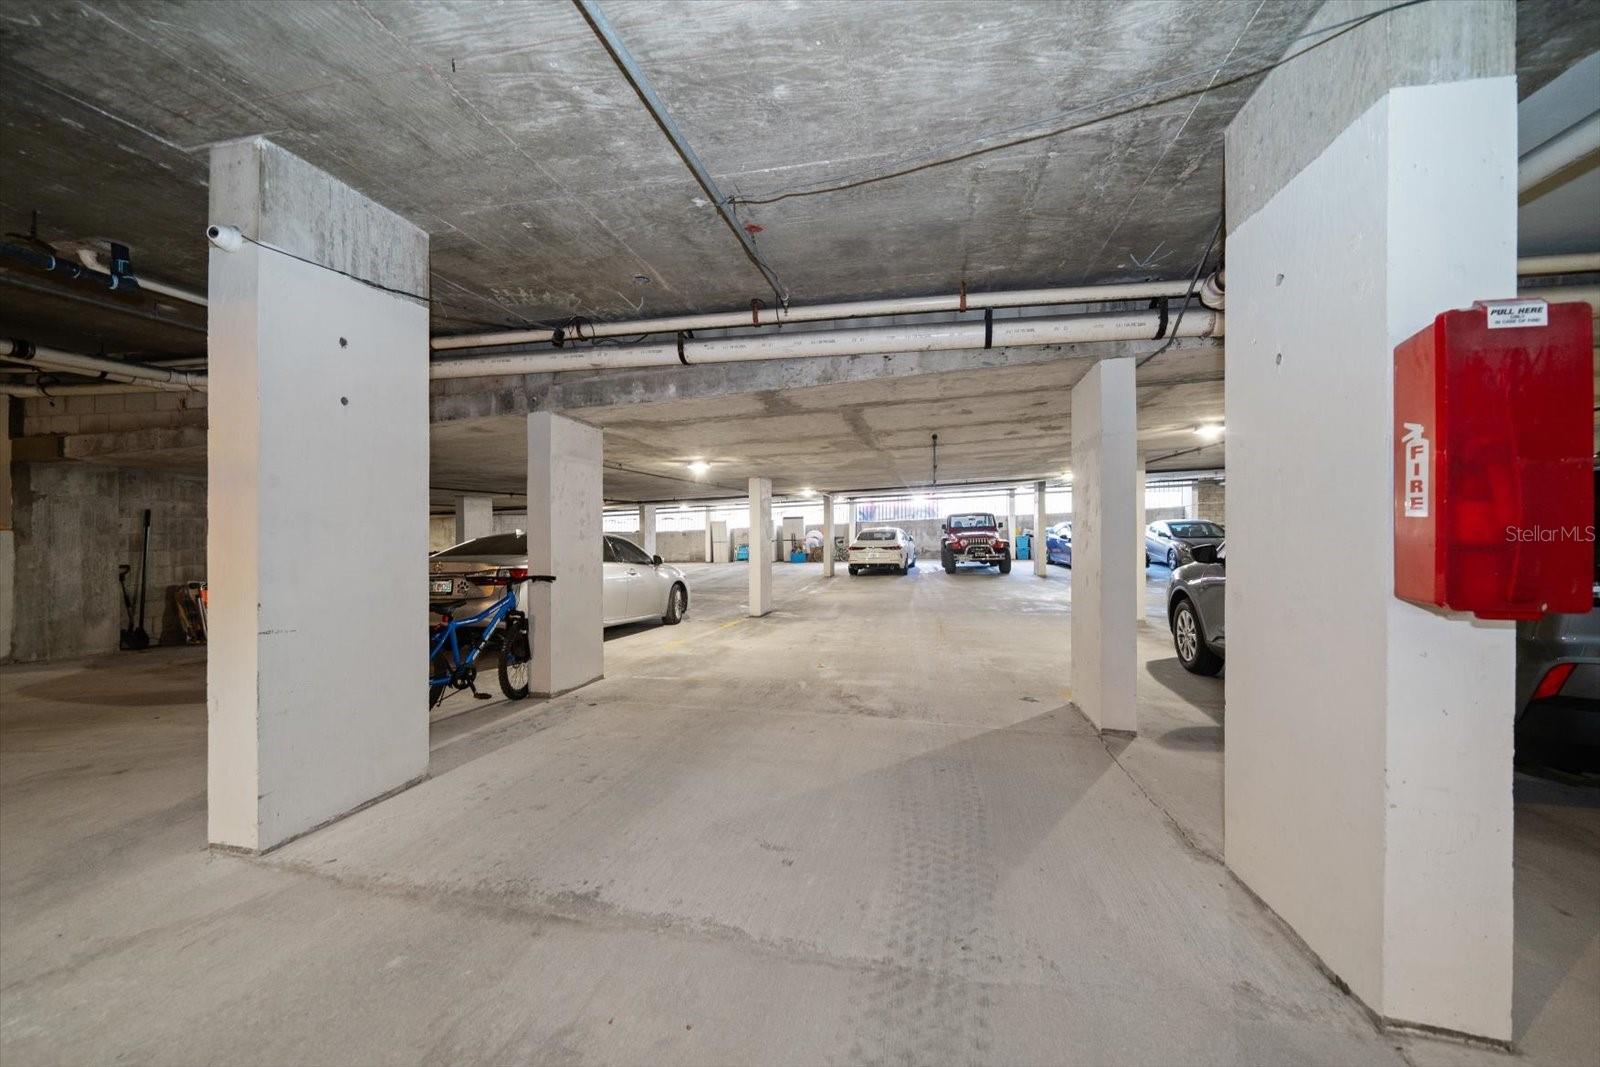 Under building parking spot